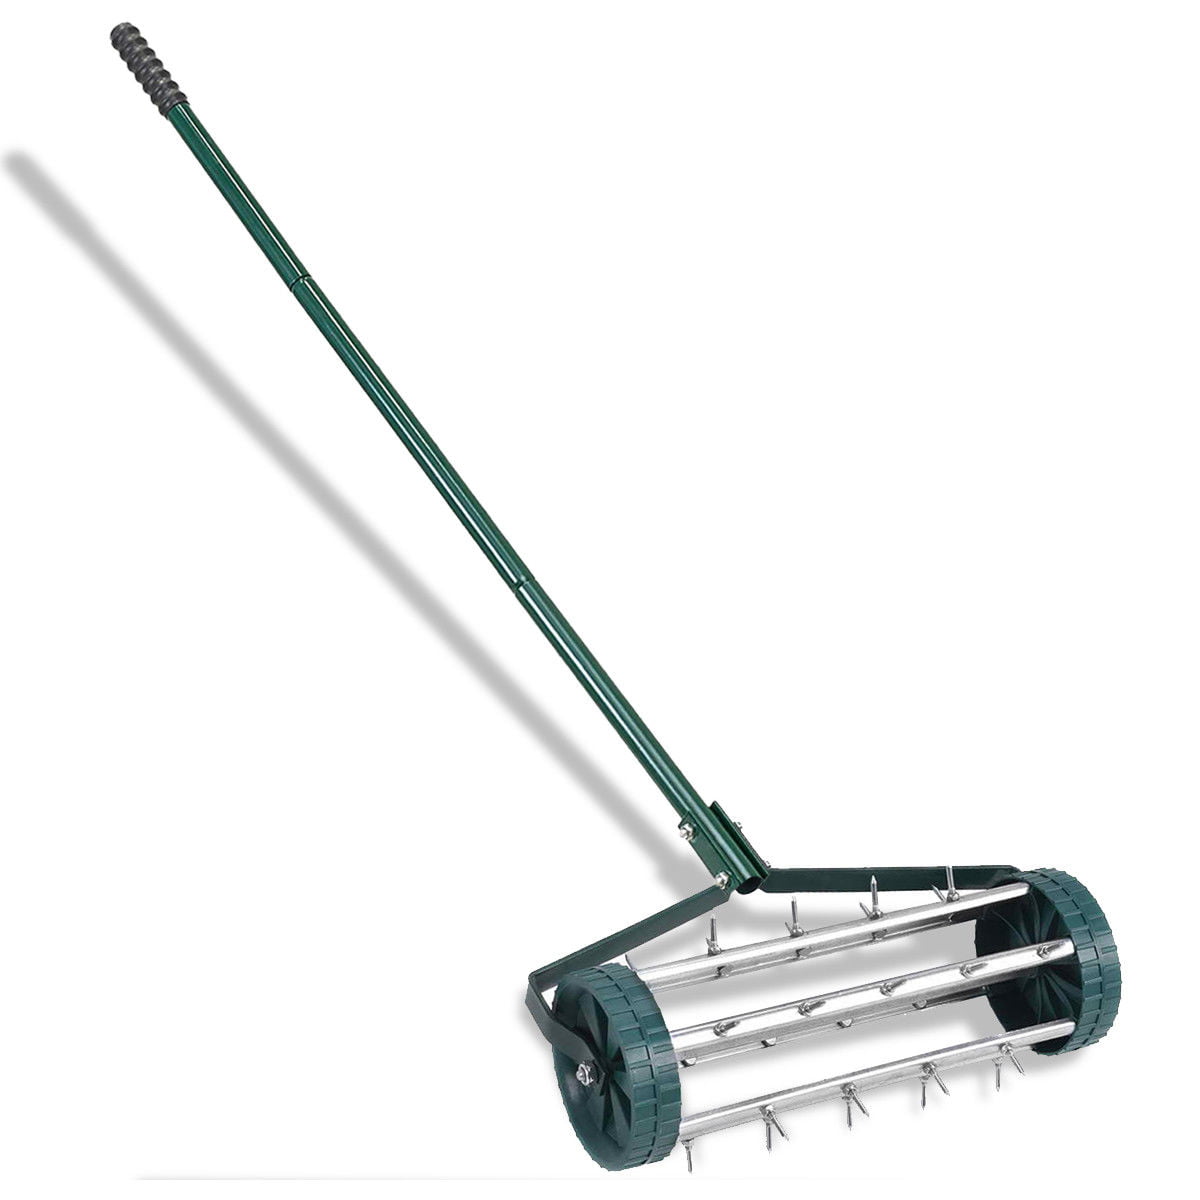 w/Mudguard Push Spike Rolling Garden Lawn Aerator Roller Home Grass Steel Handle